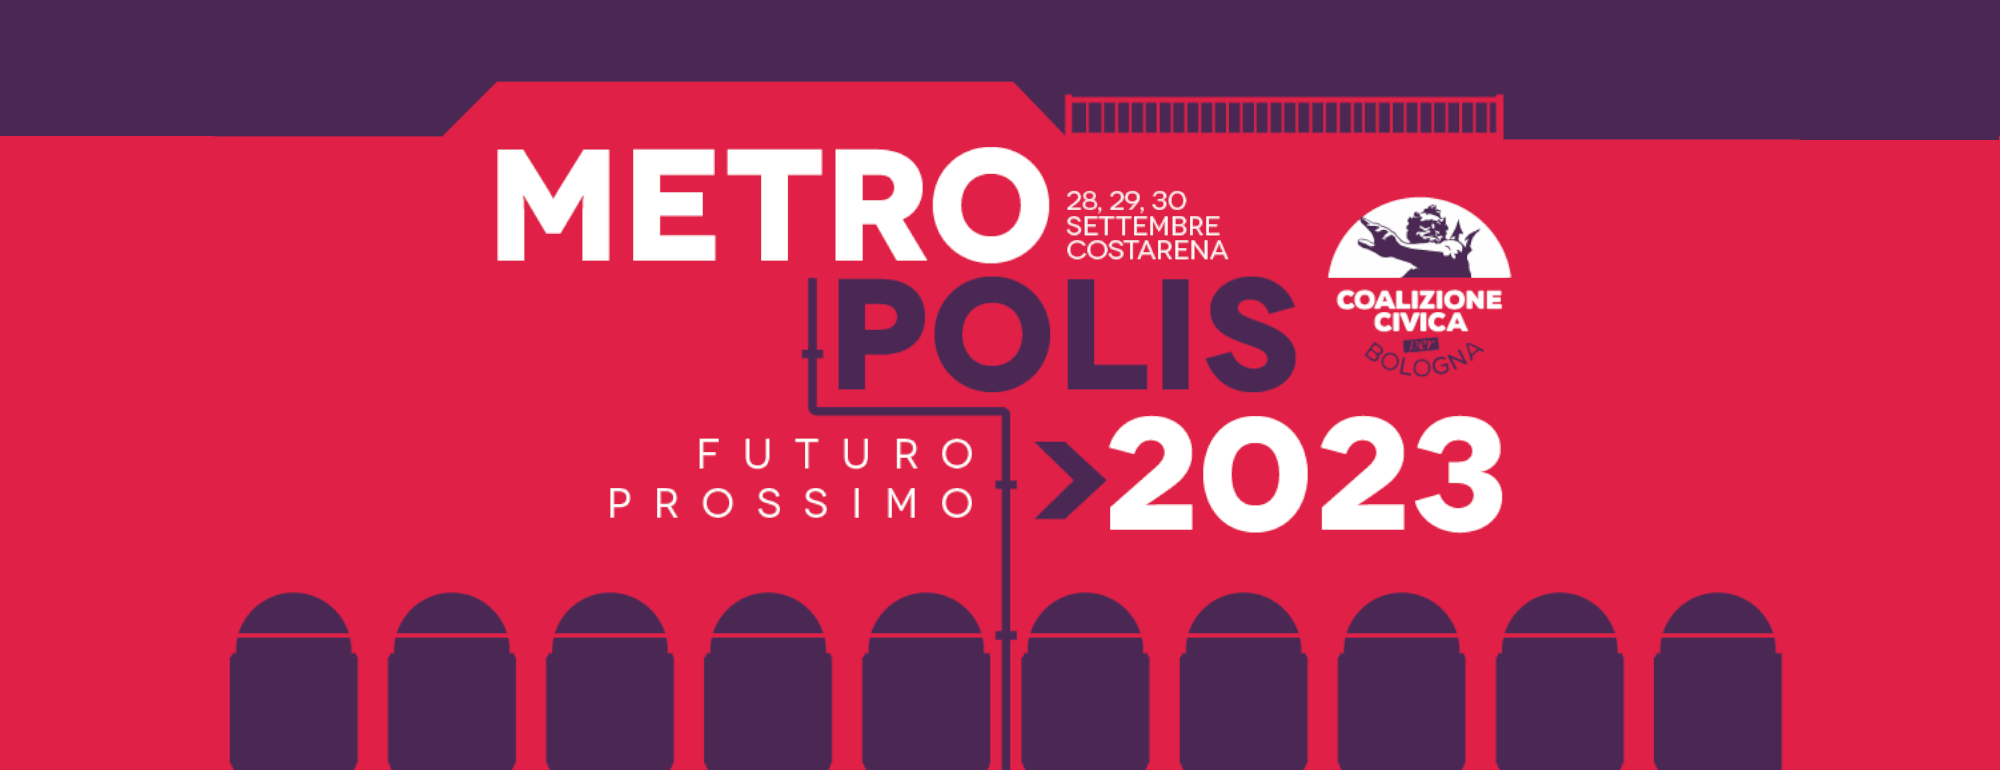 Metropolis 2023